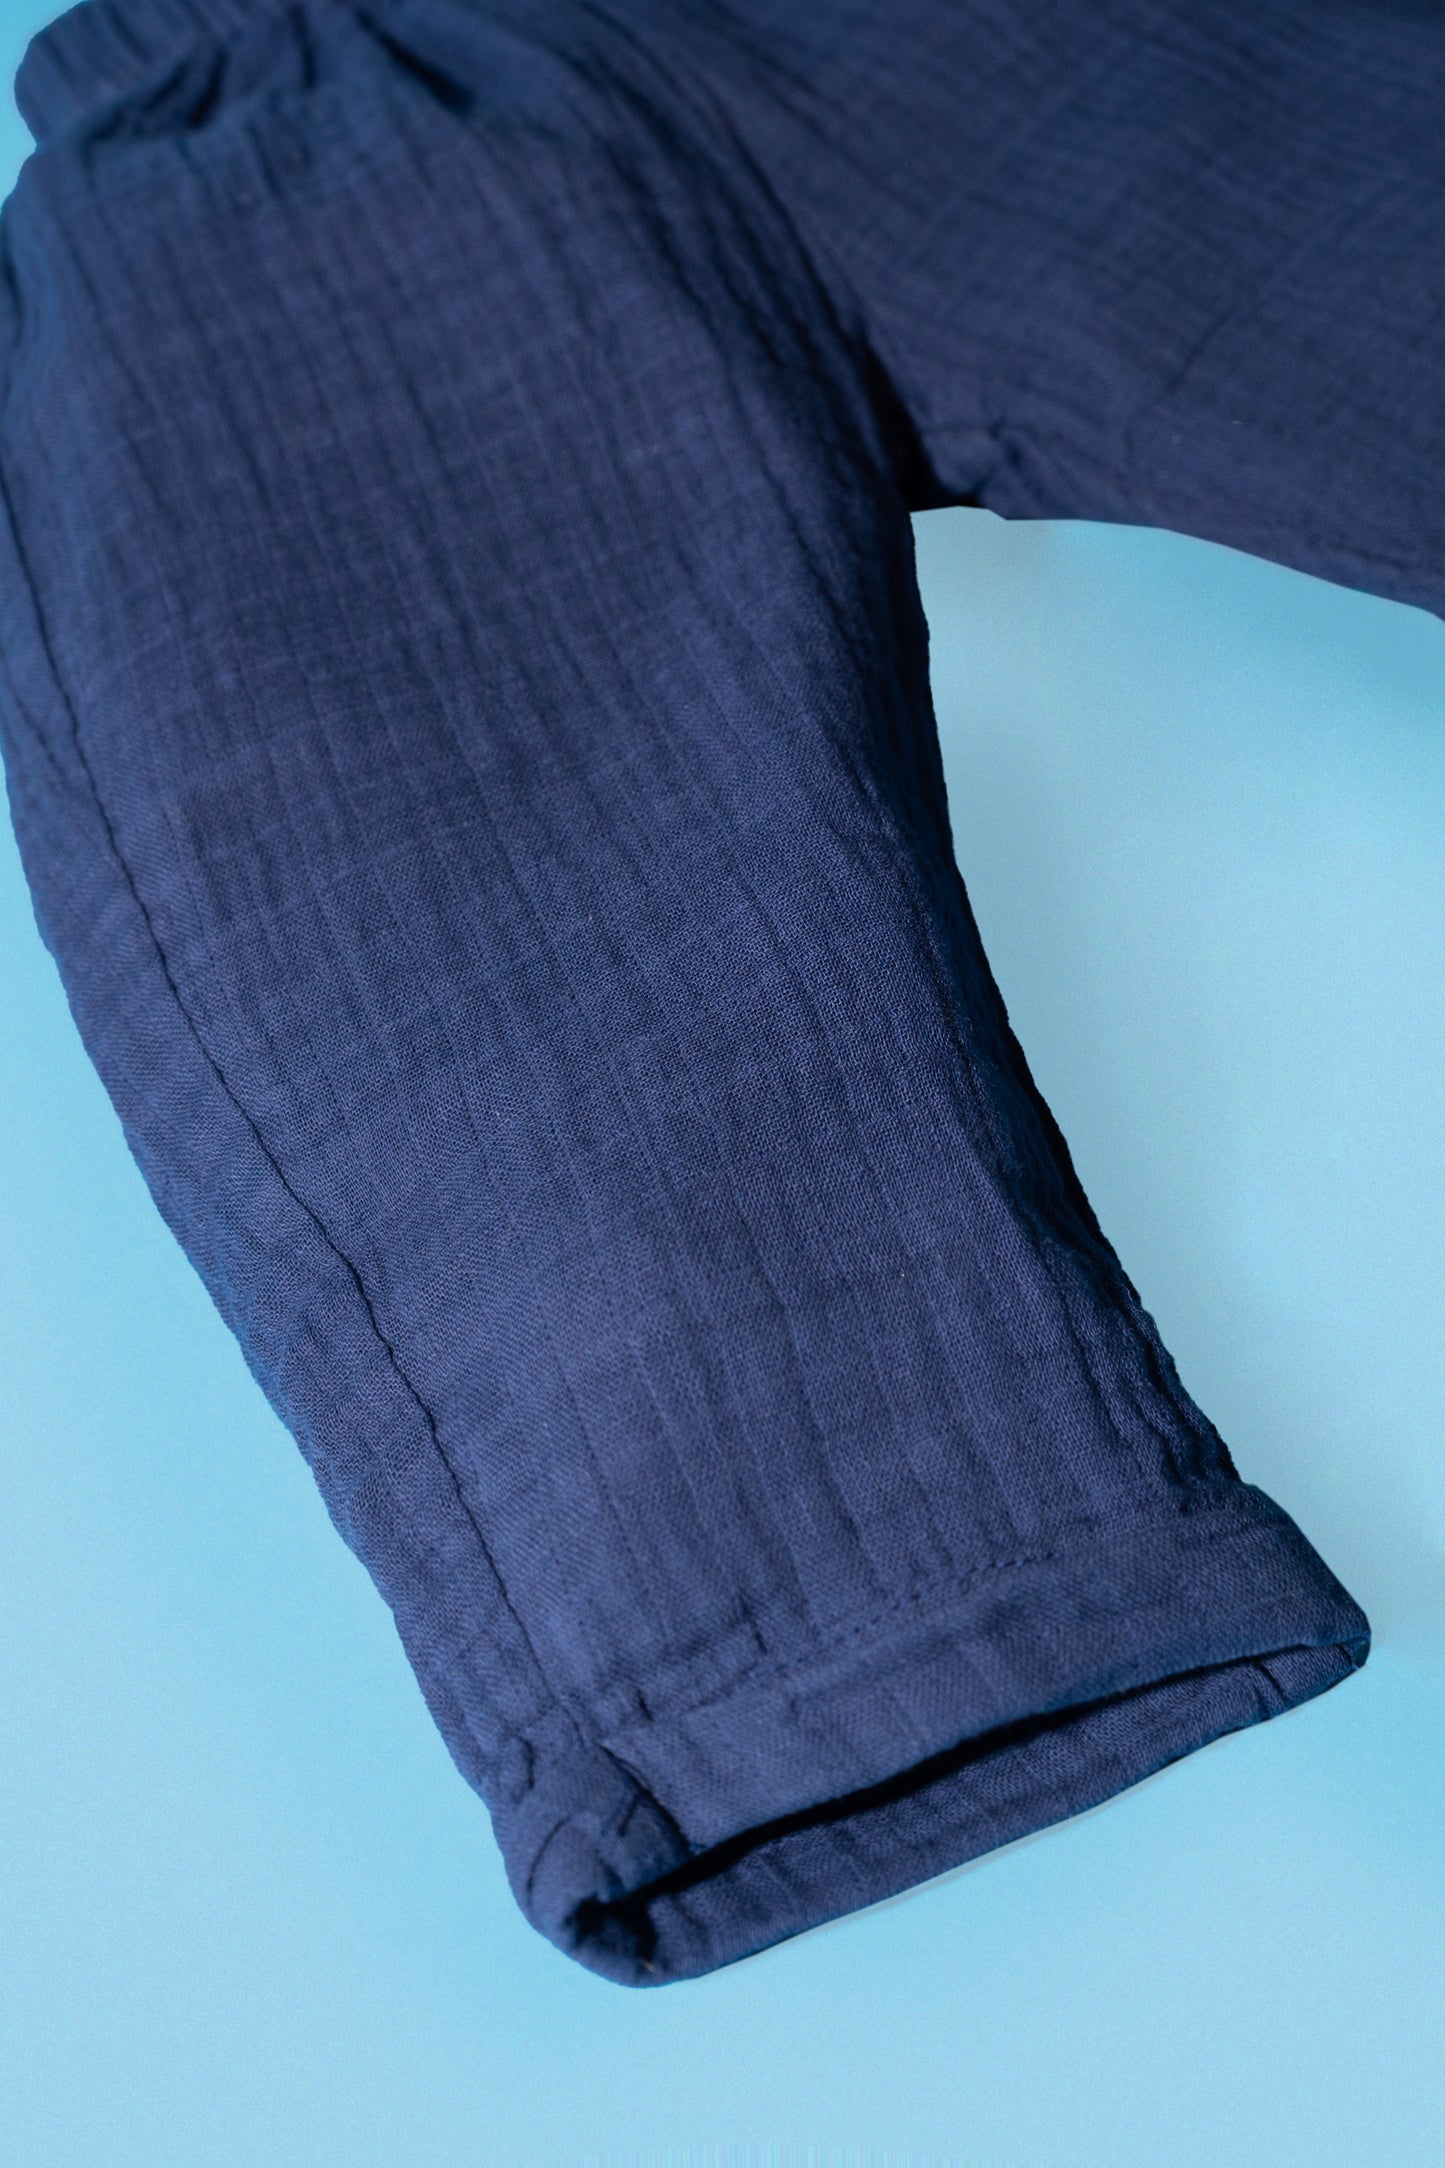 L'ÎLE BLEUE - Pantalon Gaze de Coton Bleu